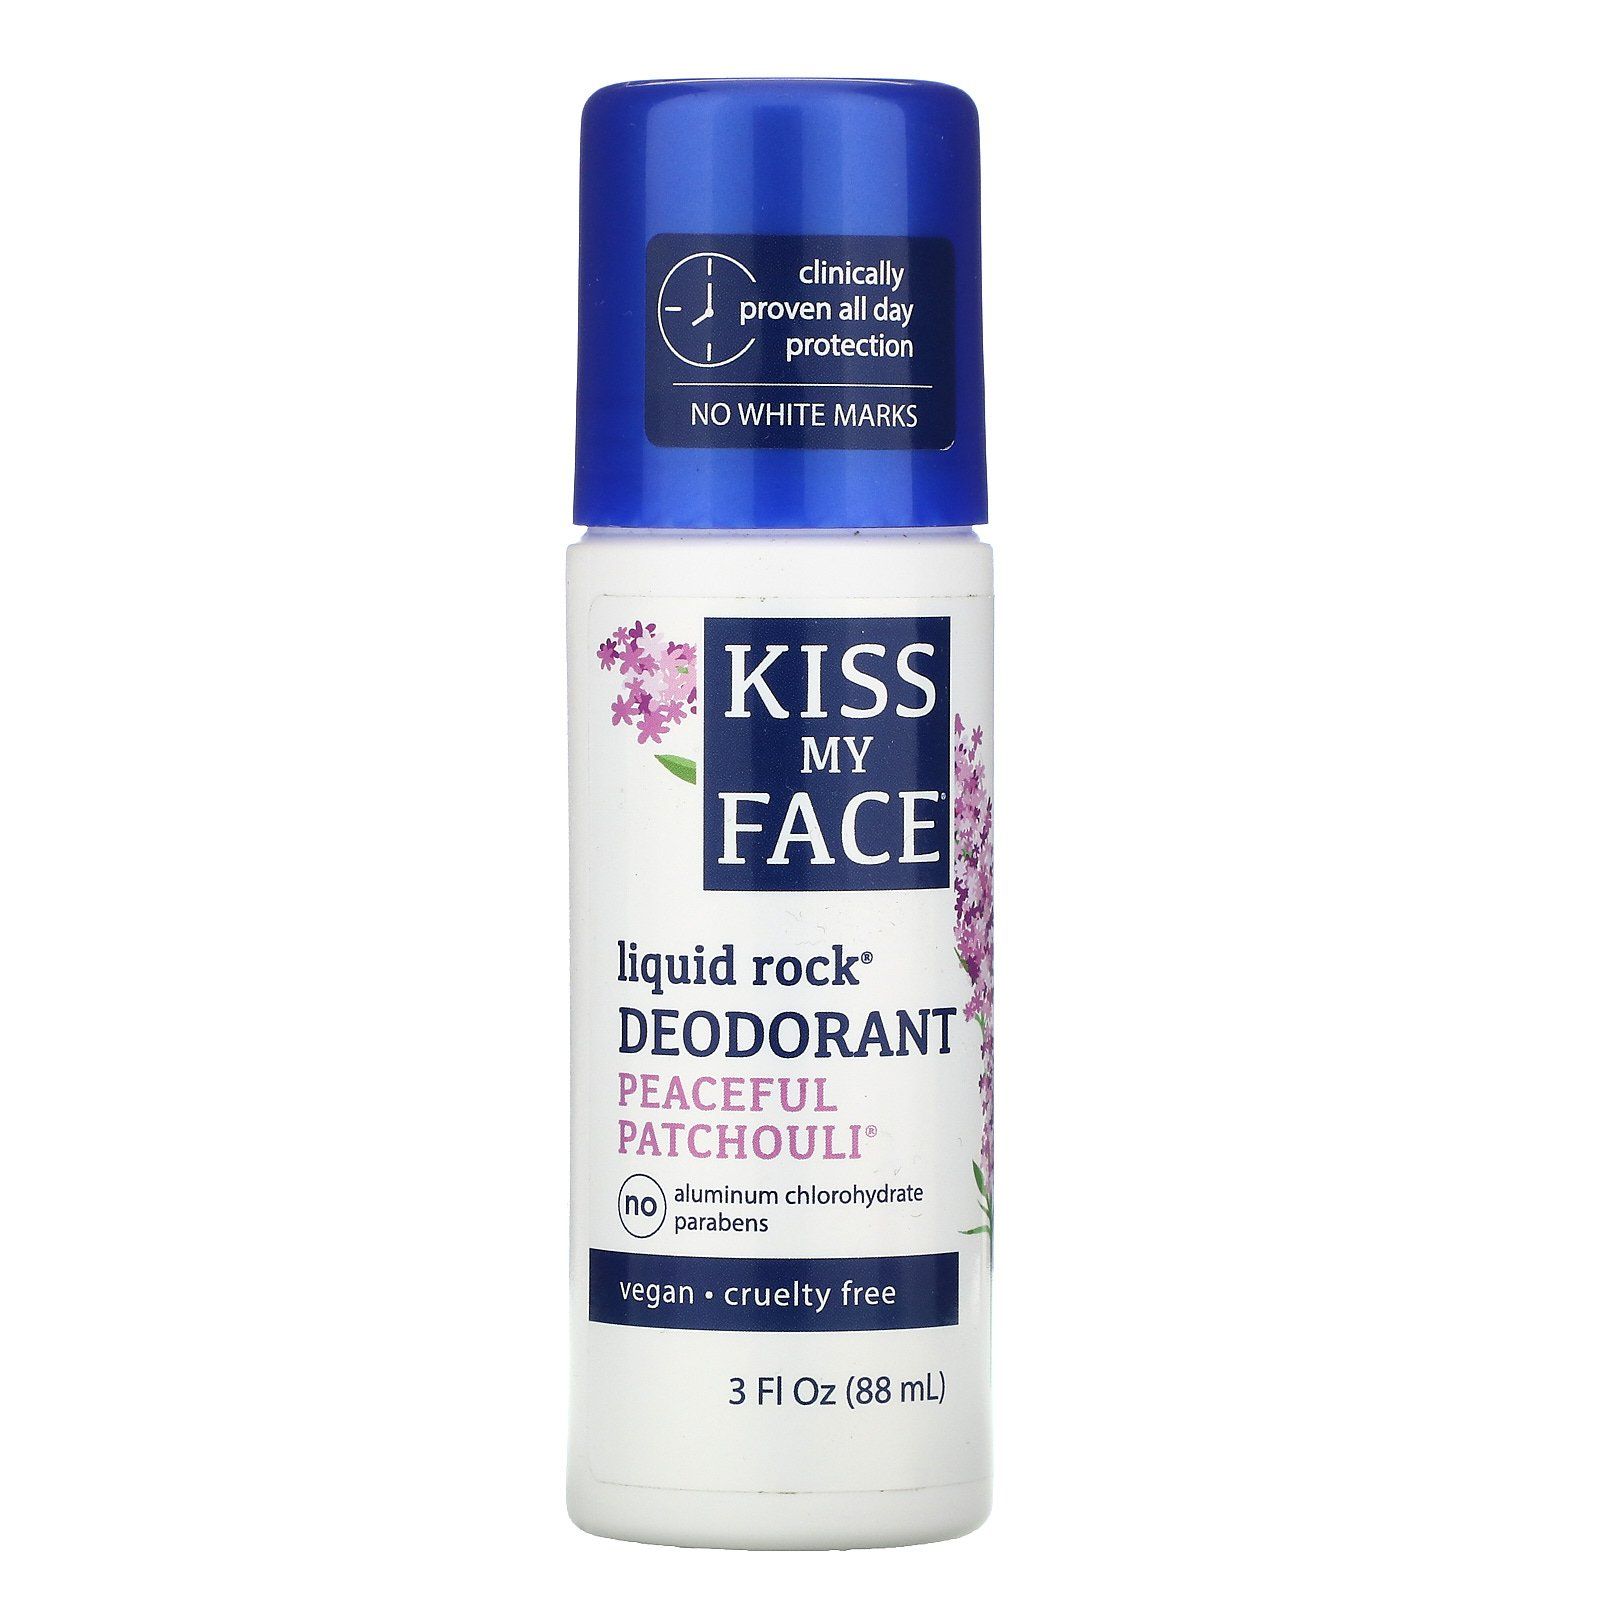 Kiss My Face Liquid Rock Deodorant Peaceful Patchouli 3 fl oz (88 ml)